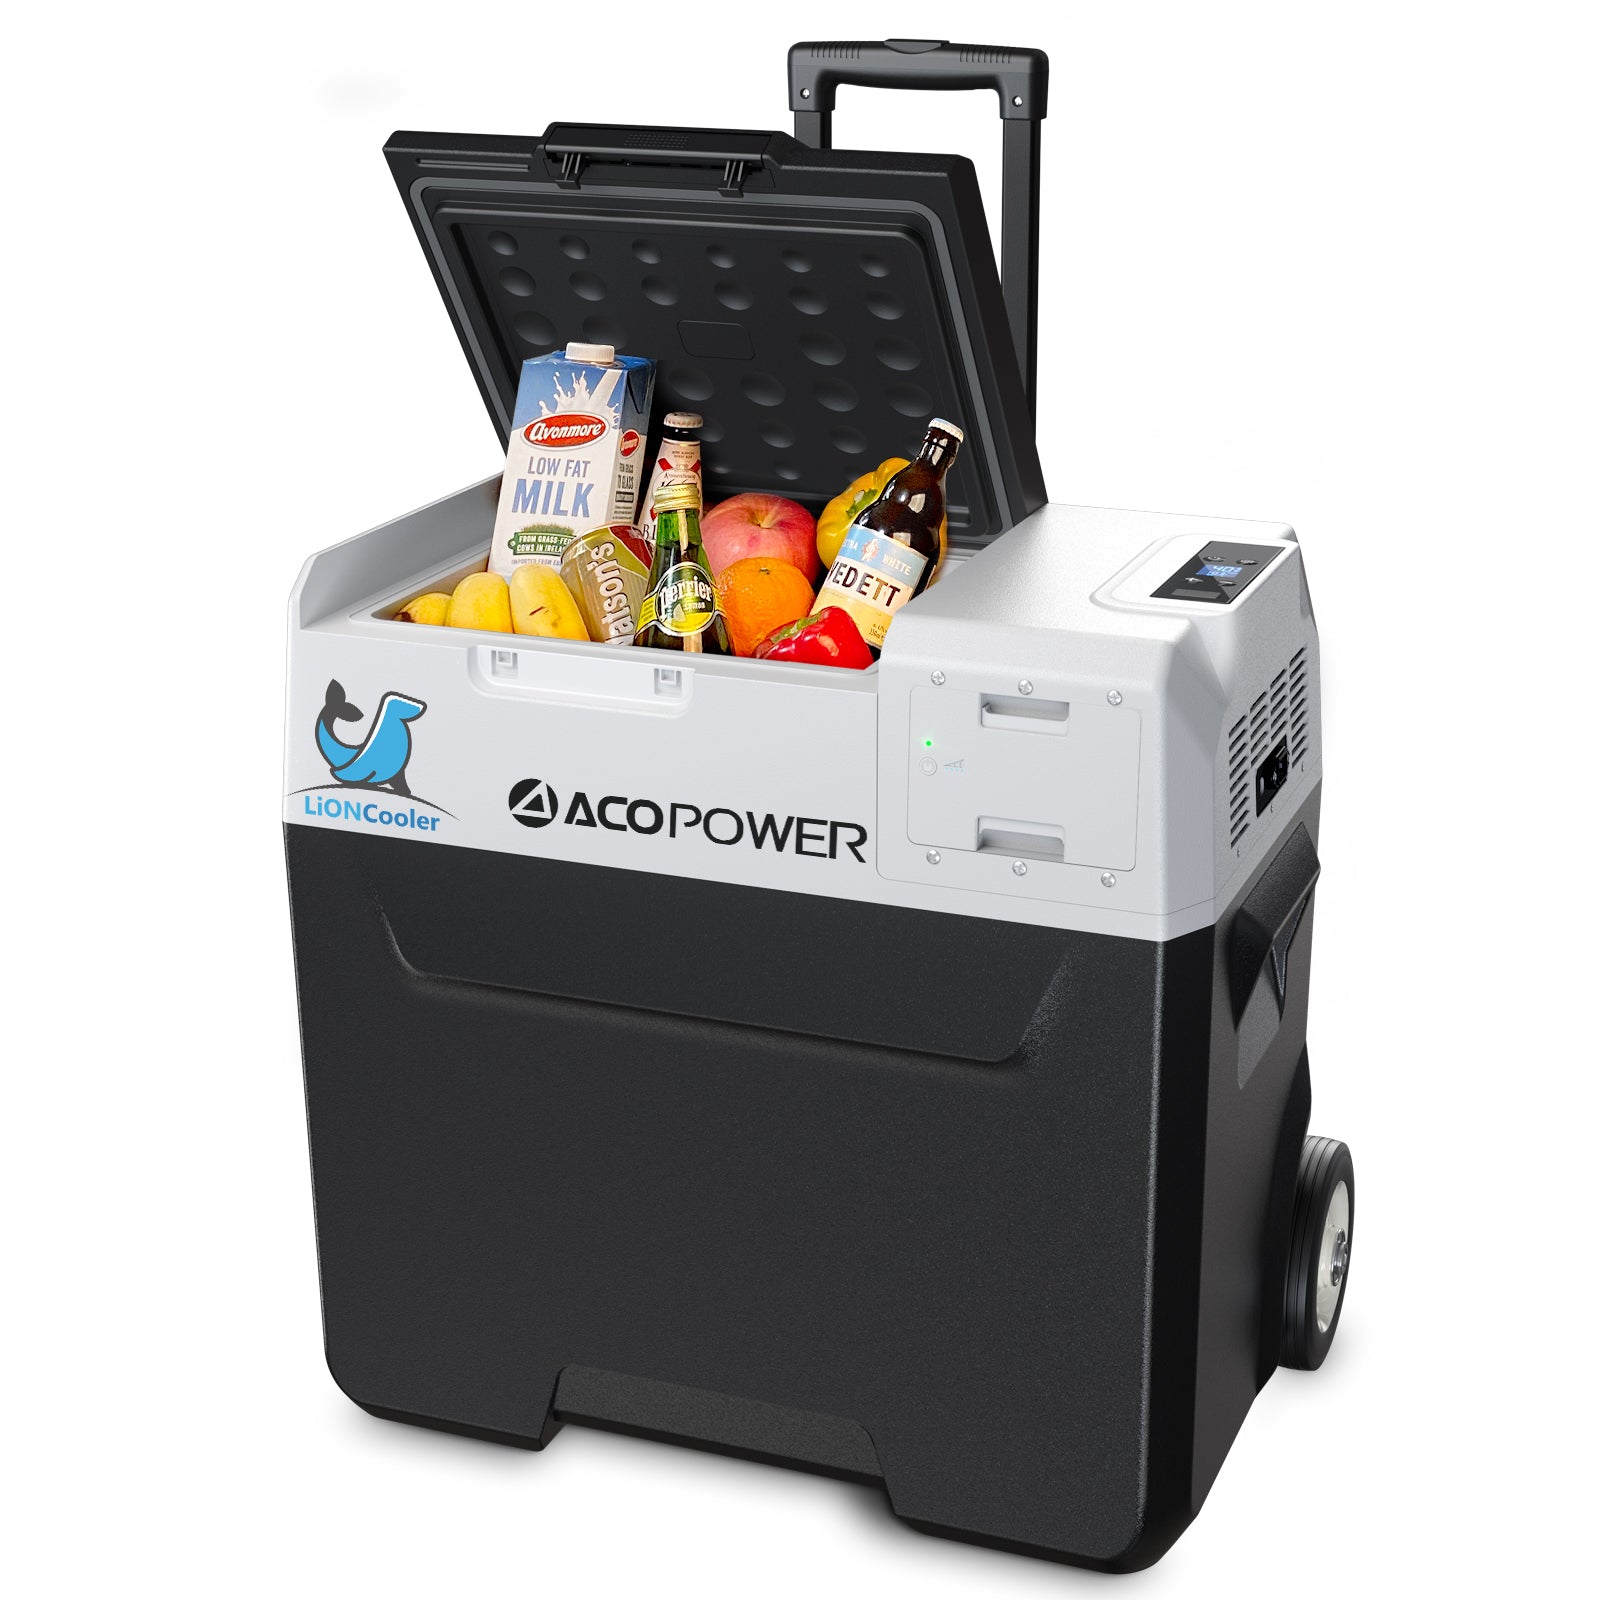 Reviews for ACOPower LiONCooler 42 Qt. Battery Powered Portable